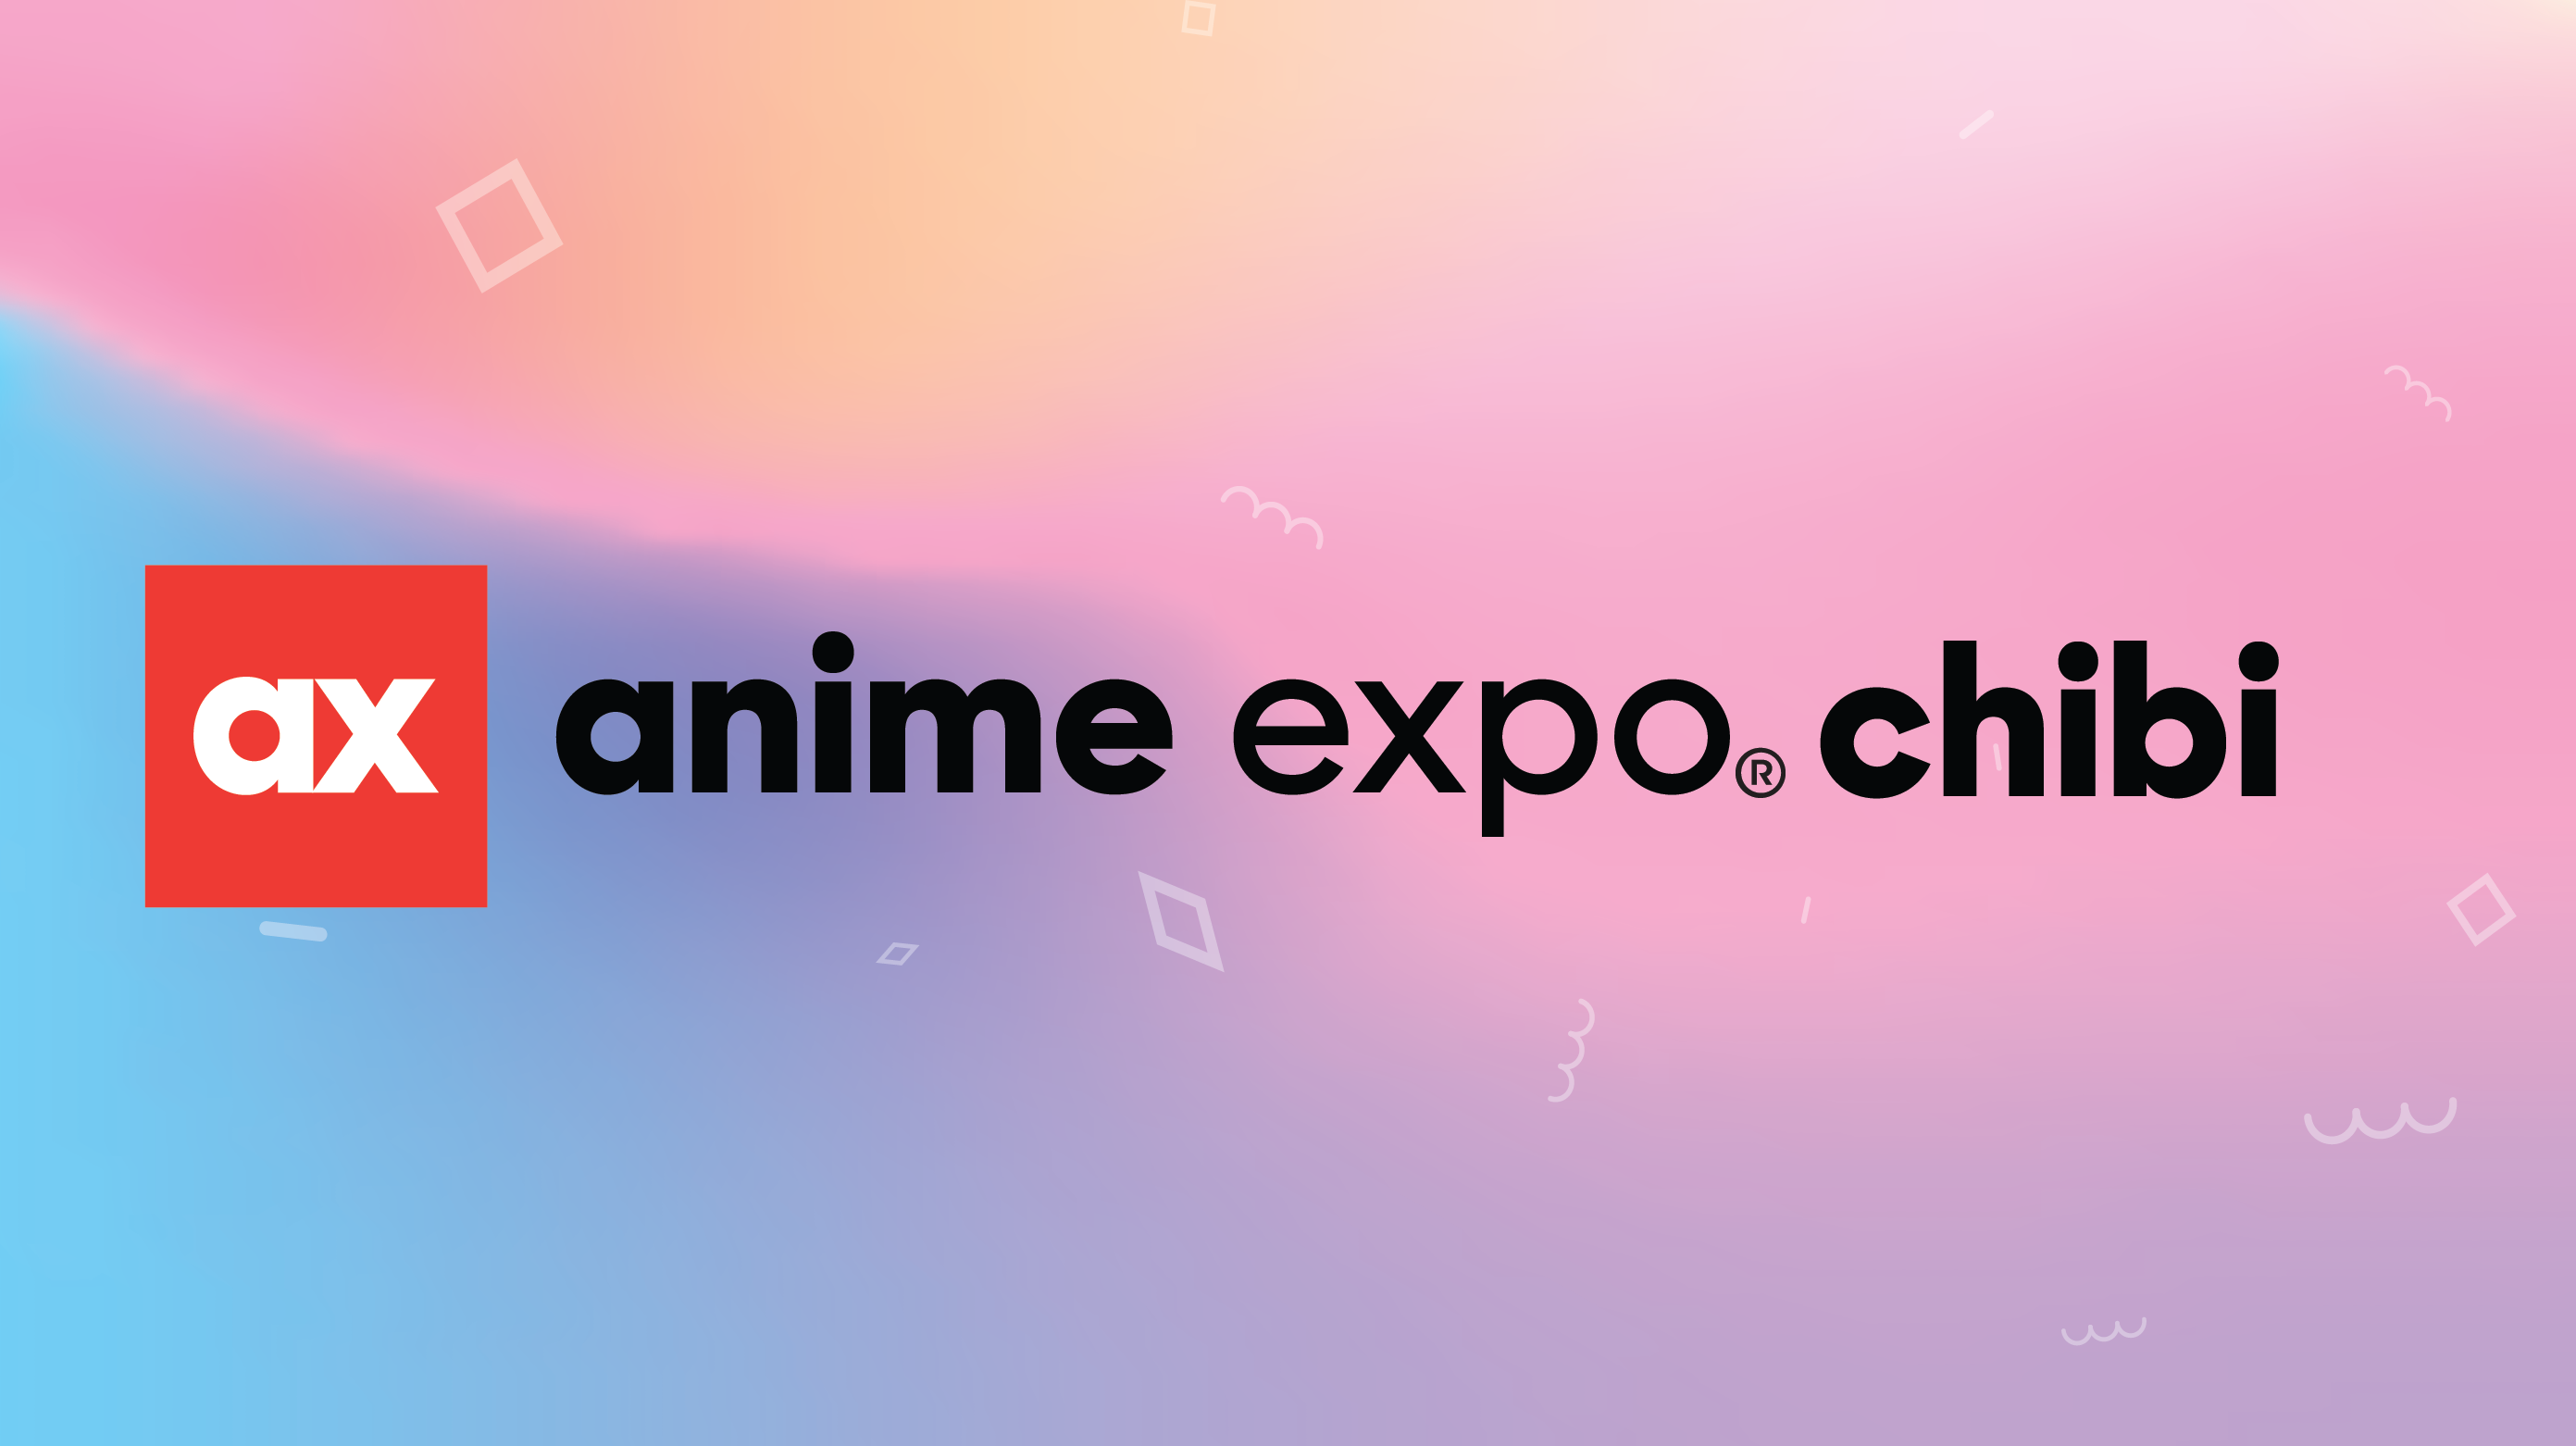 anime expo chibi on X anime expo chibi registration is now open   Register now httpstcoHy7FwsoRbE httpstco8INqAks2nq  X